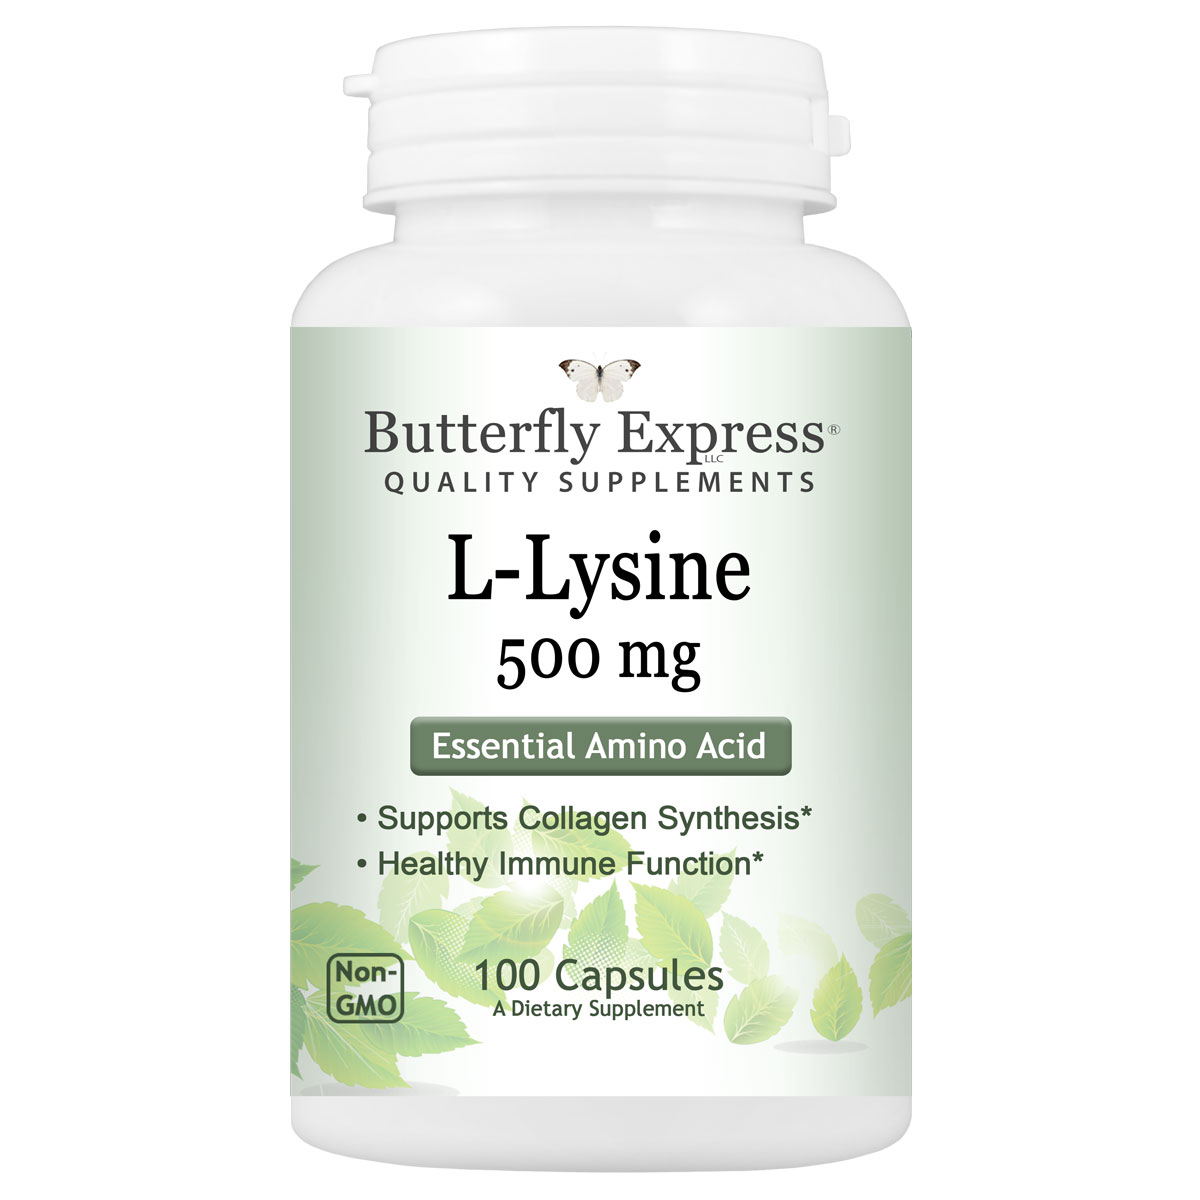 L-Lysine Supplement